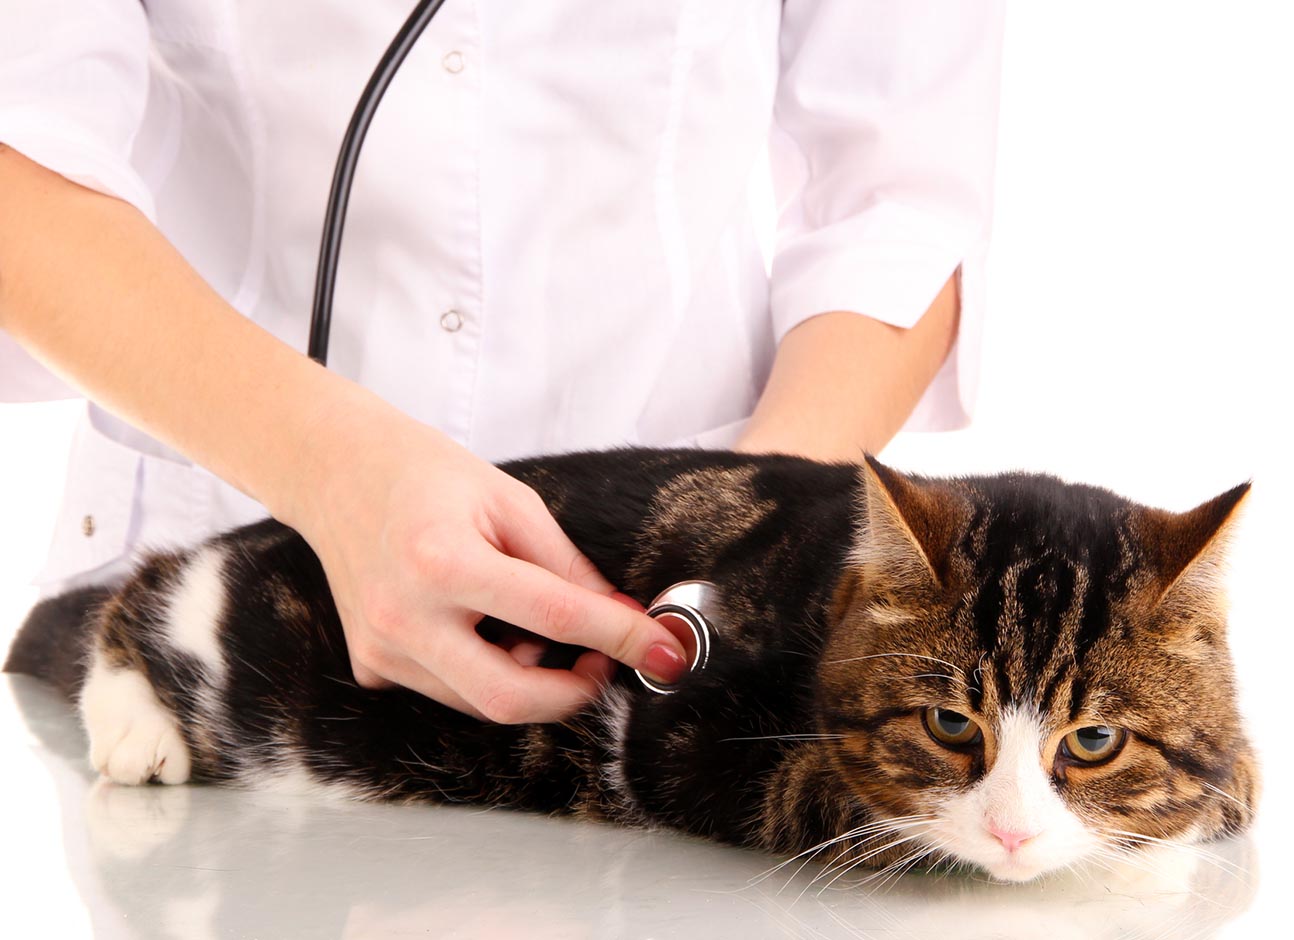 Veterinary exam for cat